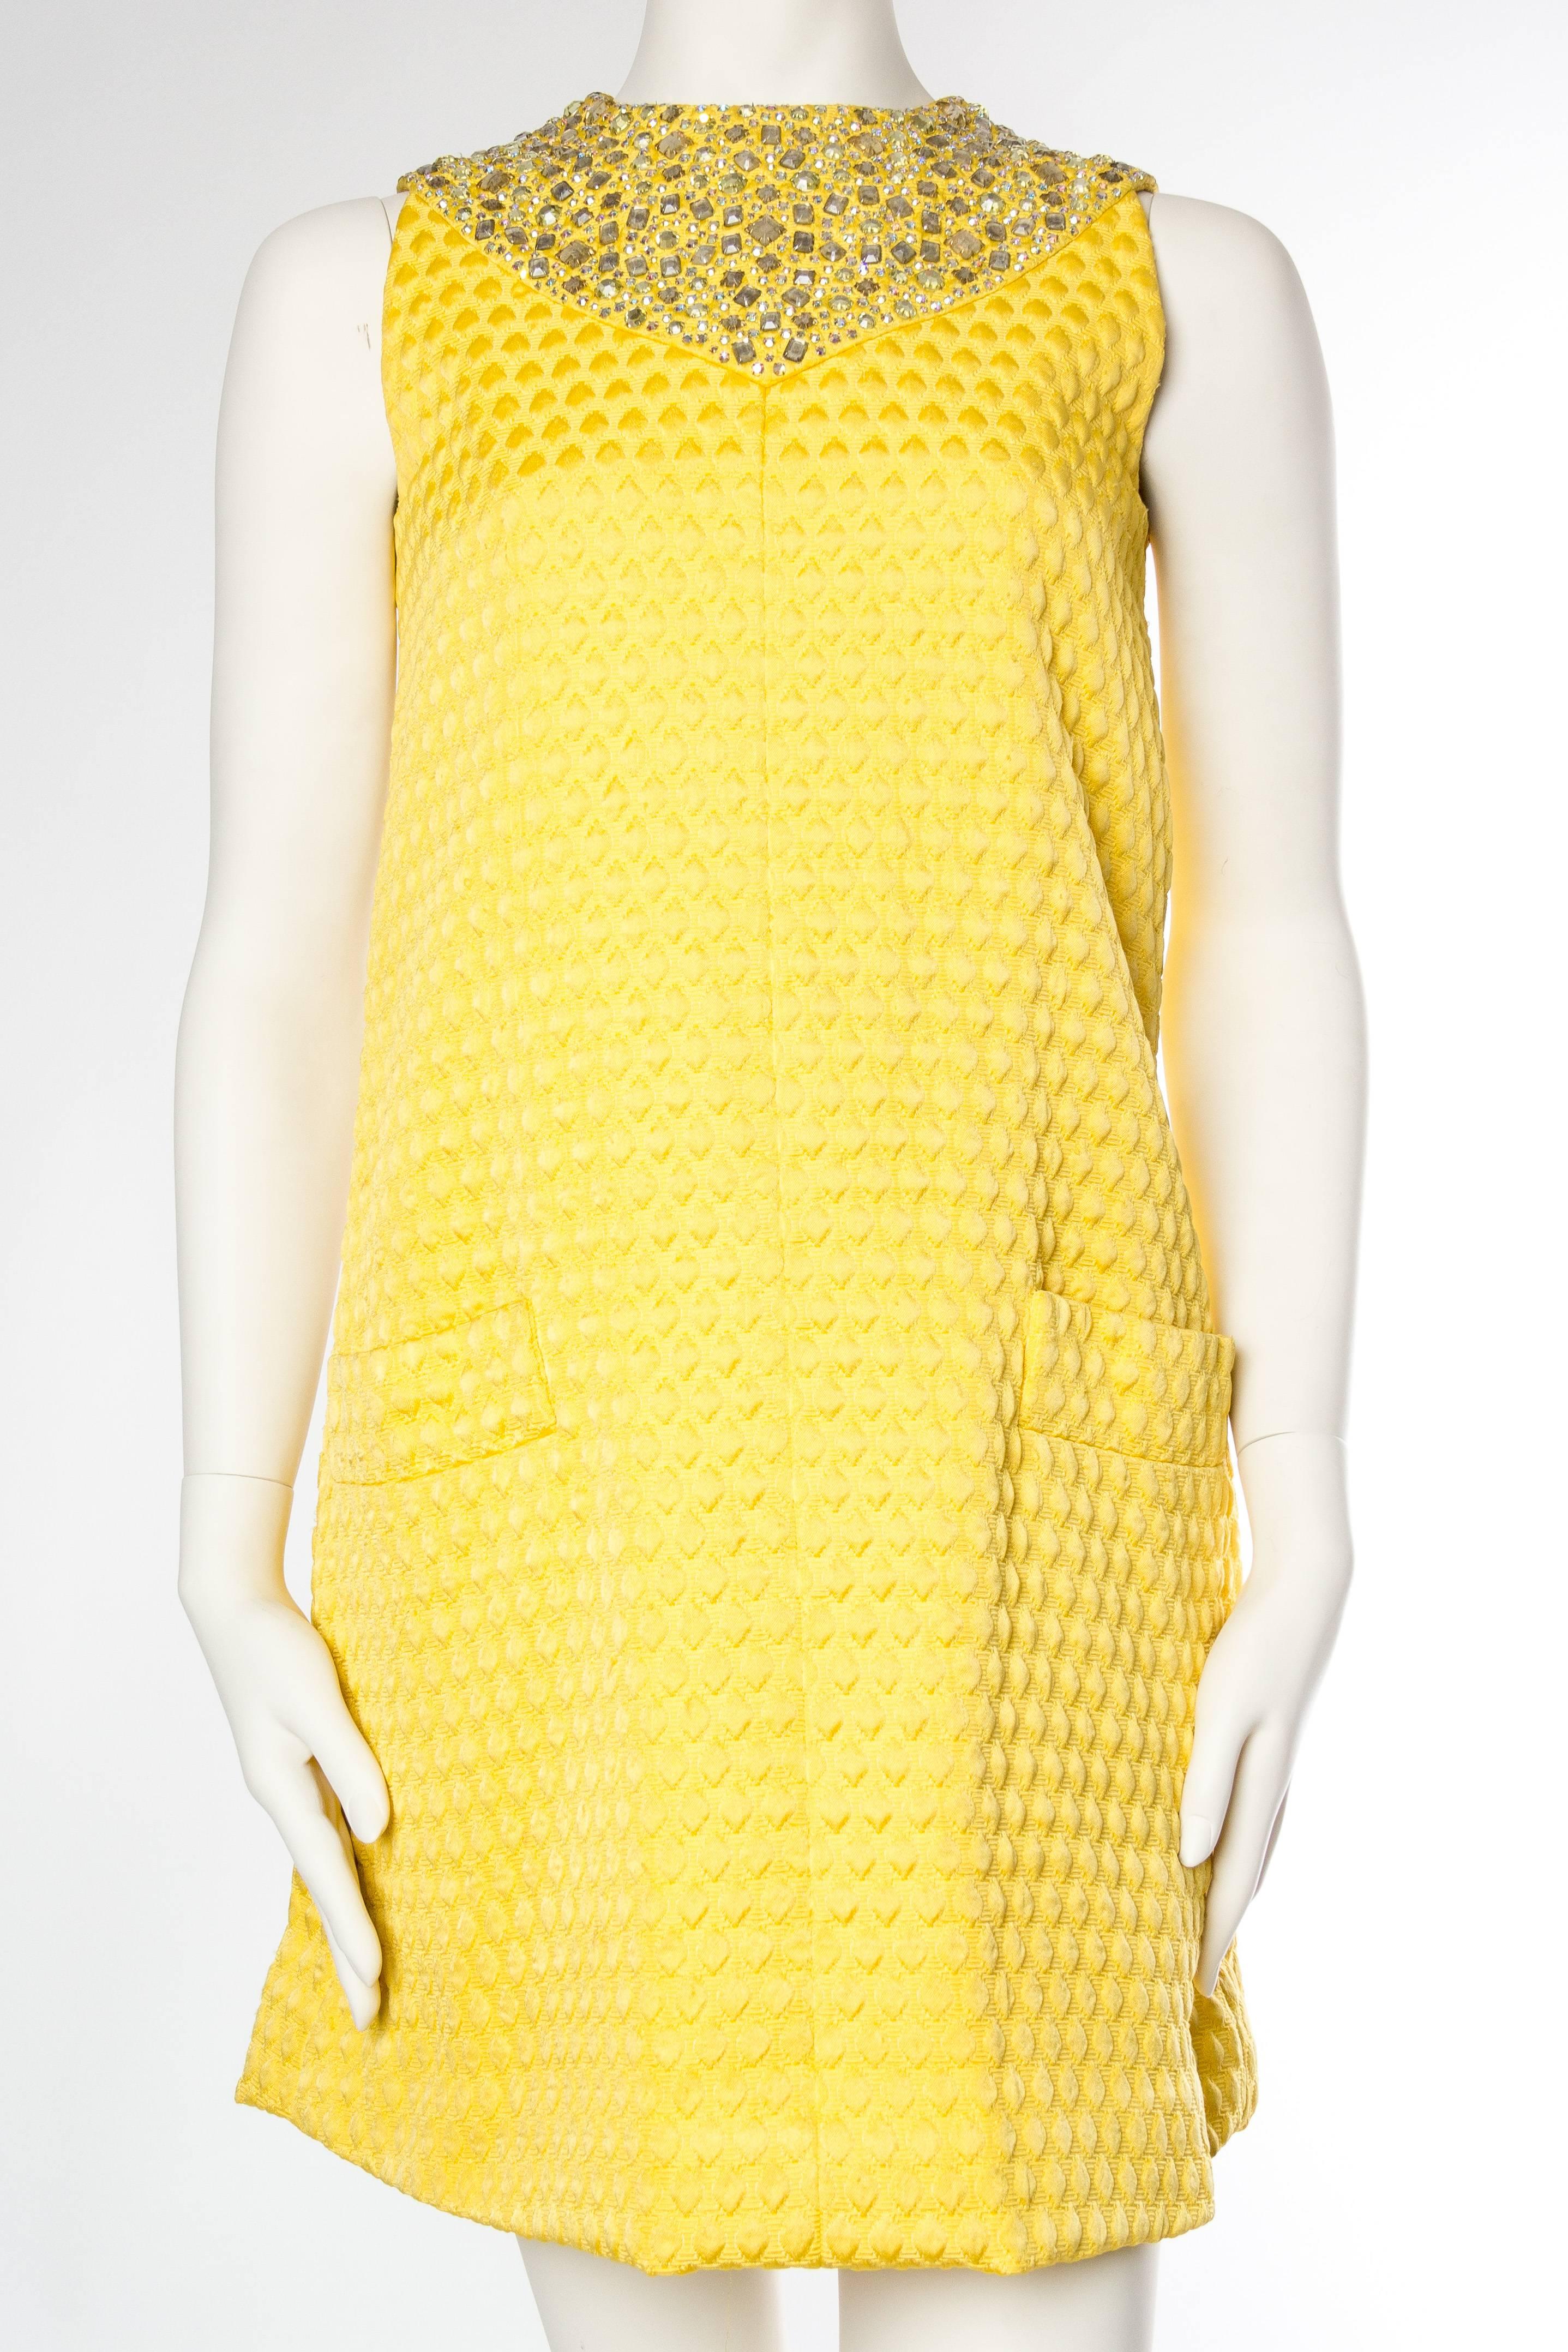 1960 OSCAR DE LA RENTA Yellow Geometric Rayon Blend Matelassé Cocktail Dress With Giant Crystal Collar